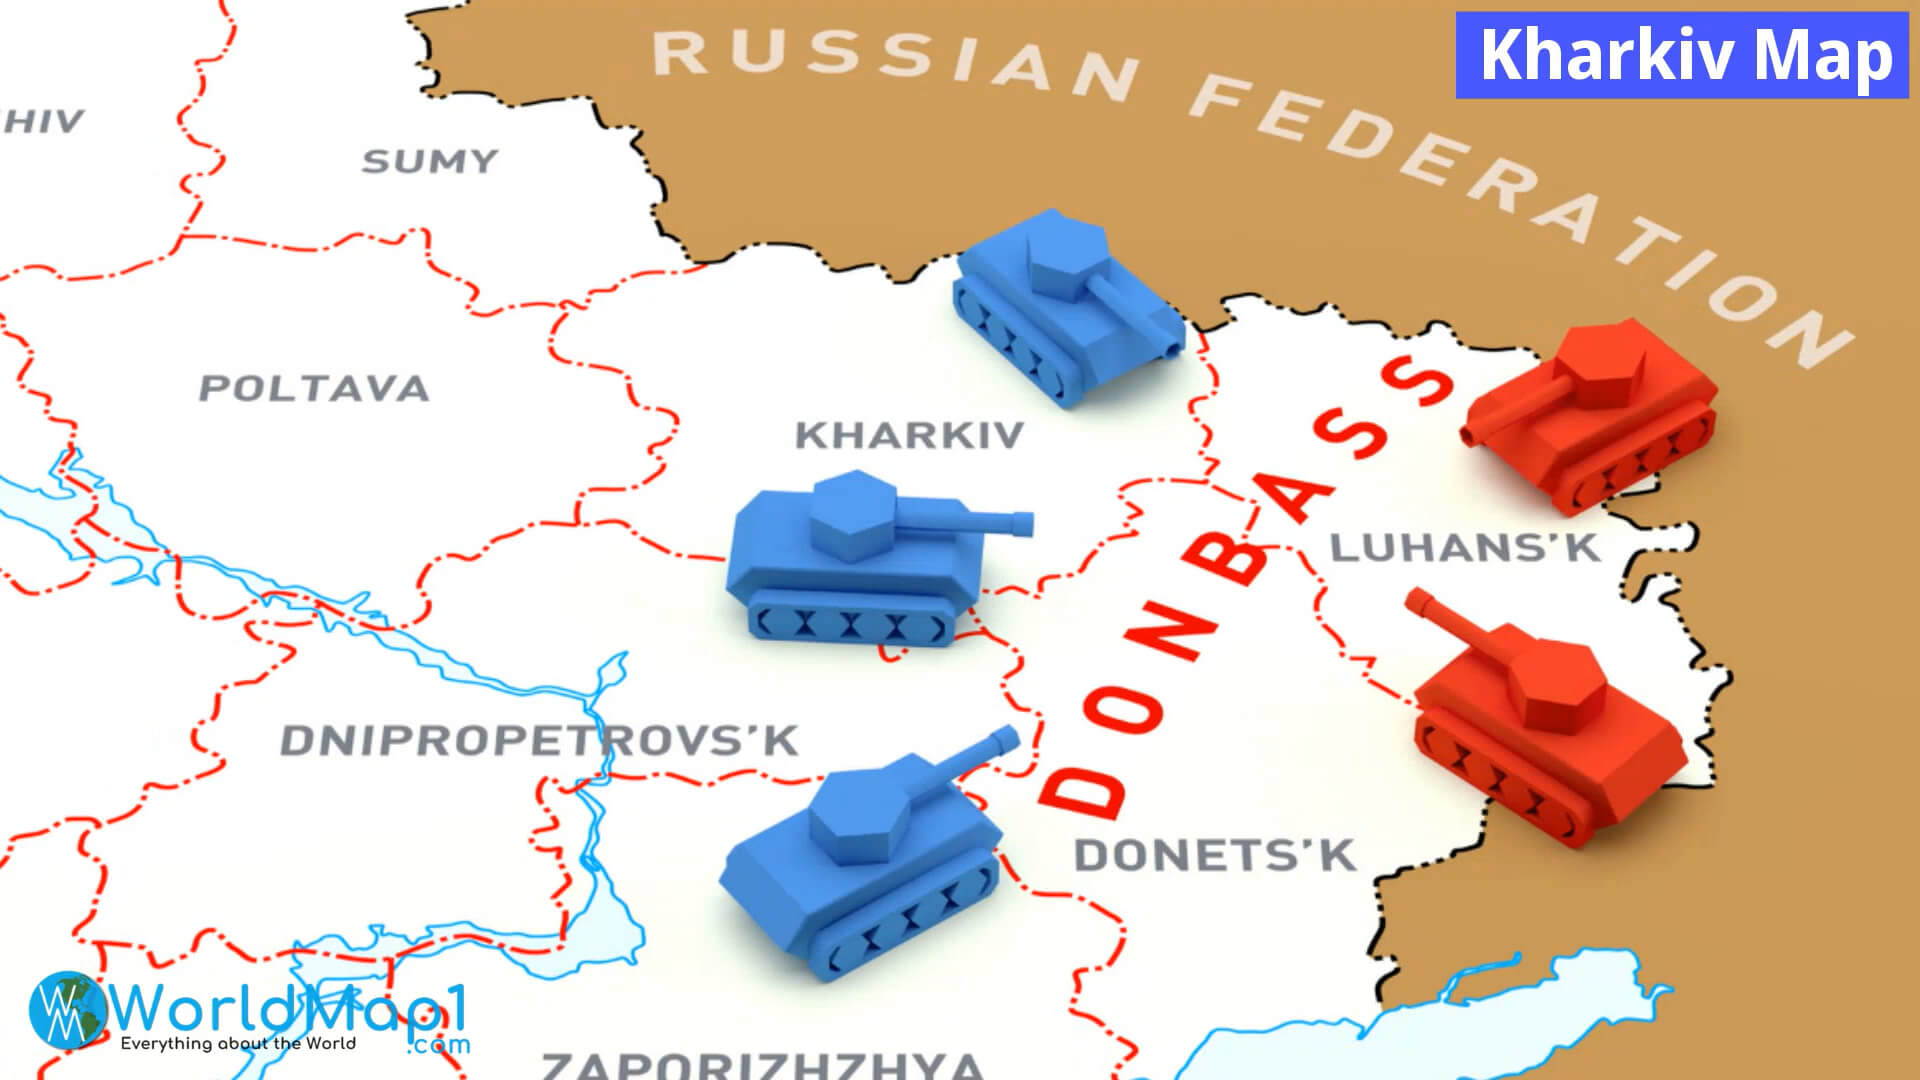 Donbass Conflict Map in Ukraine